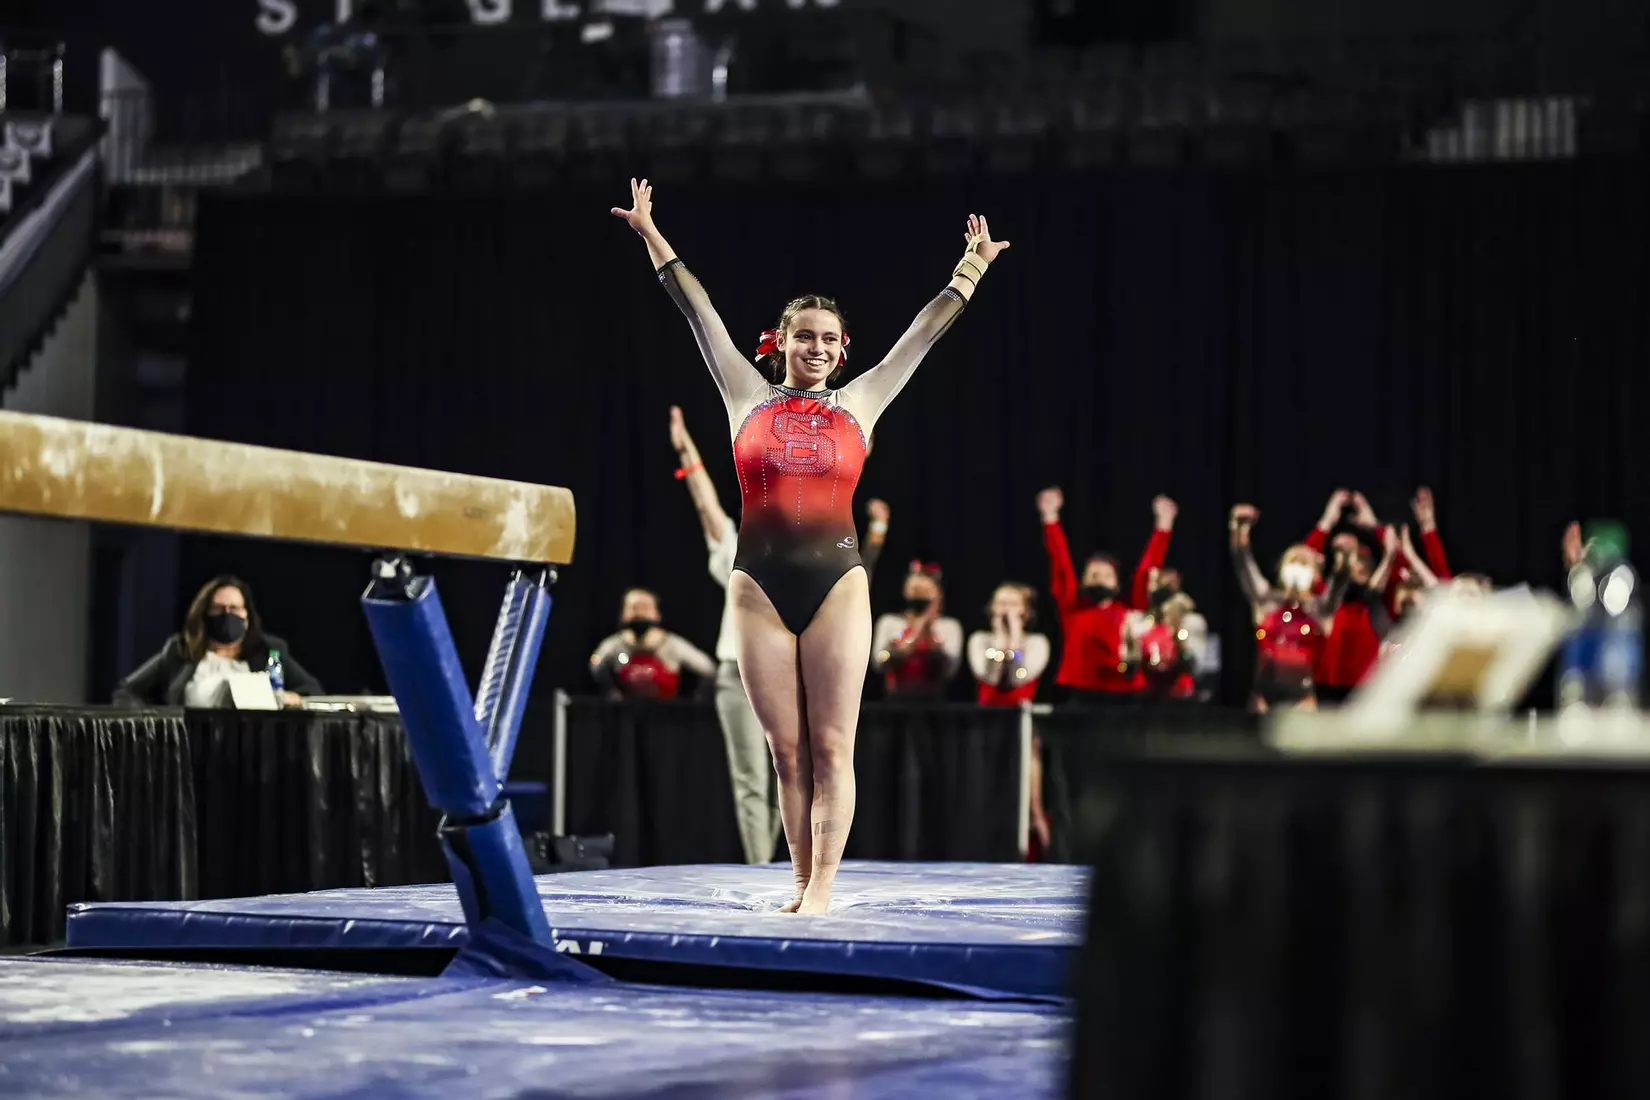 NC State's Chloe Negrete salutes after dismounting balance beam.